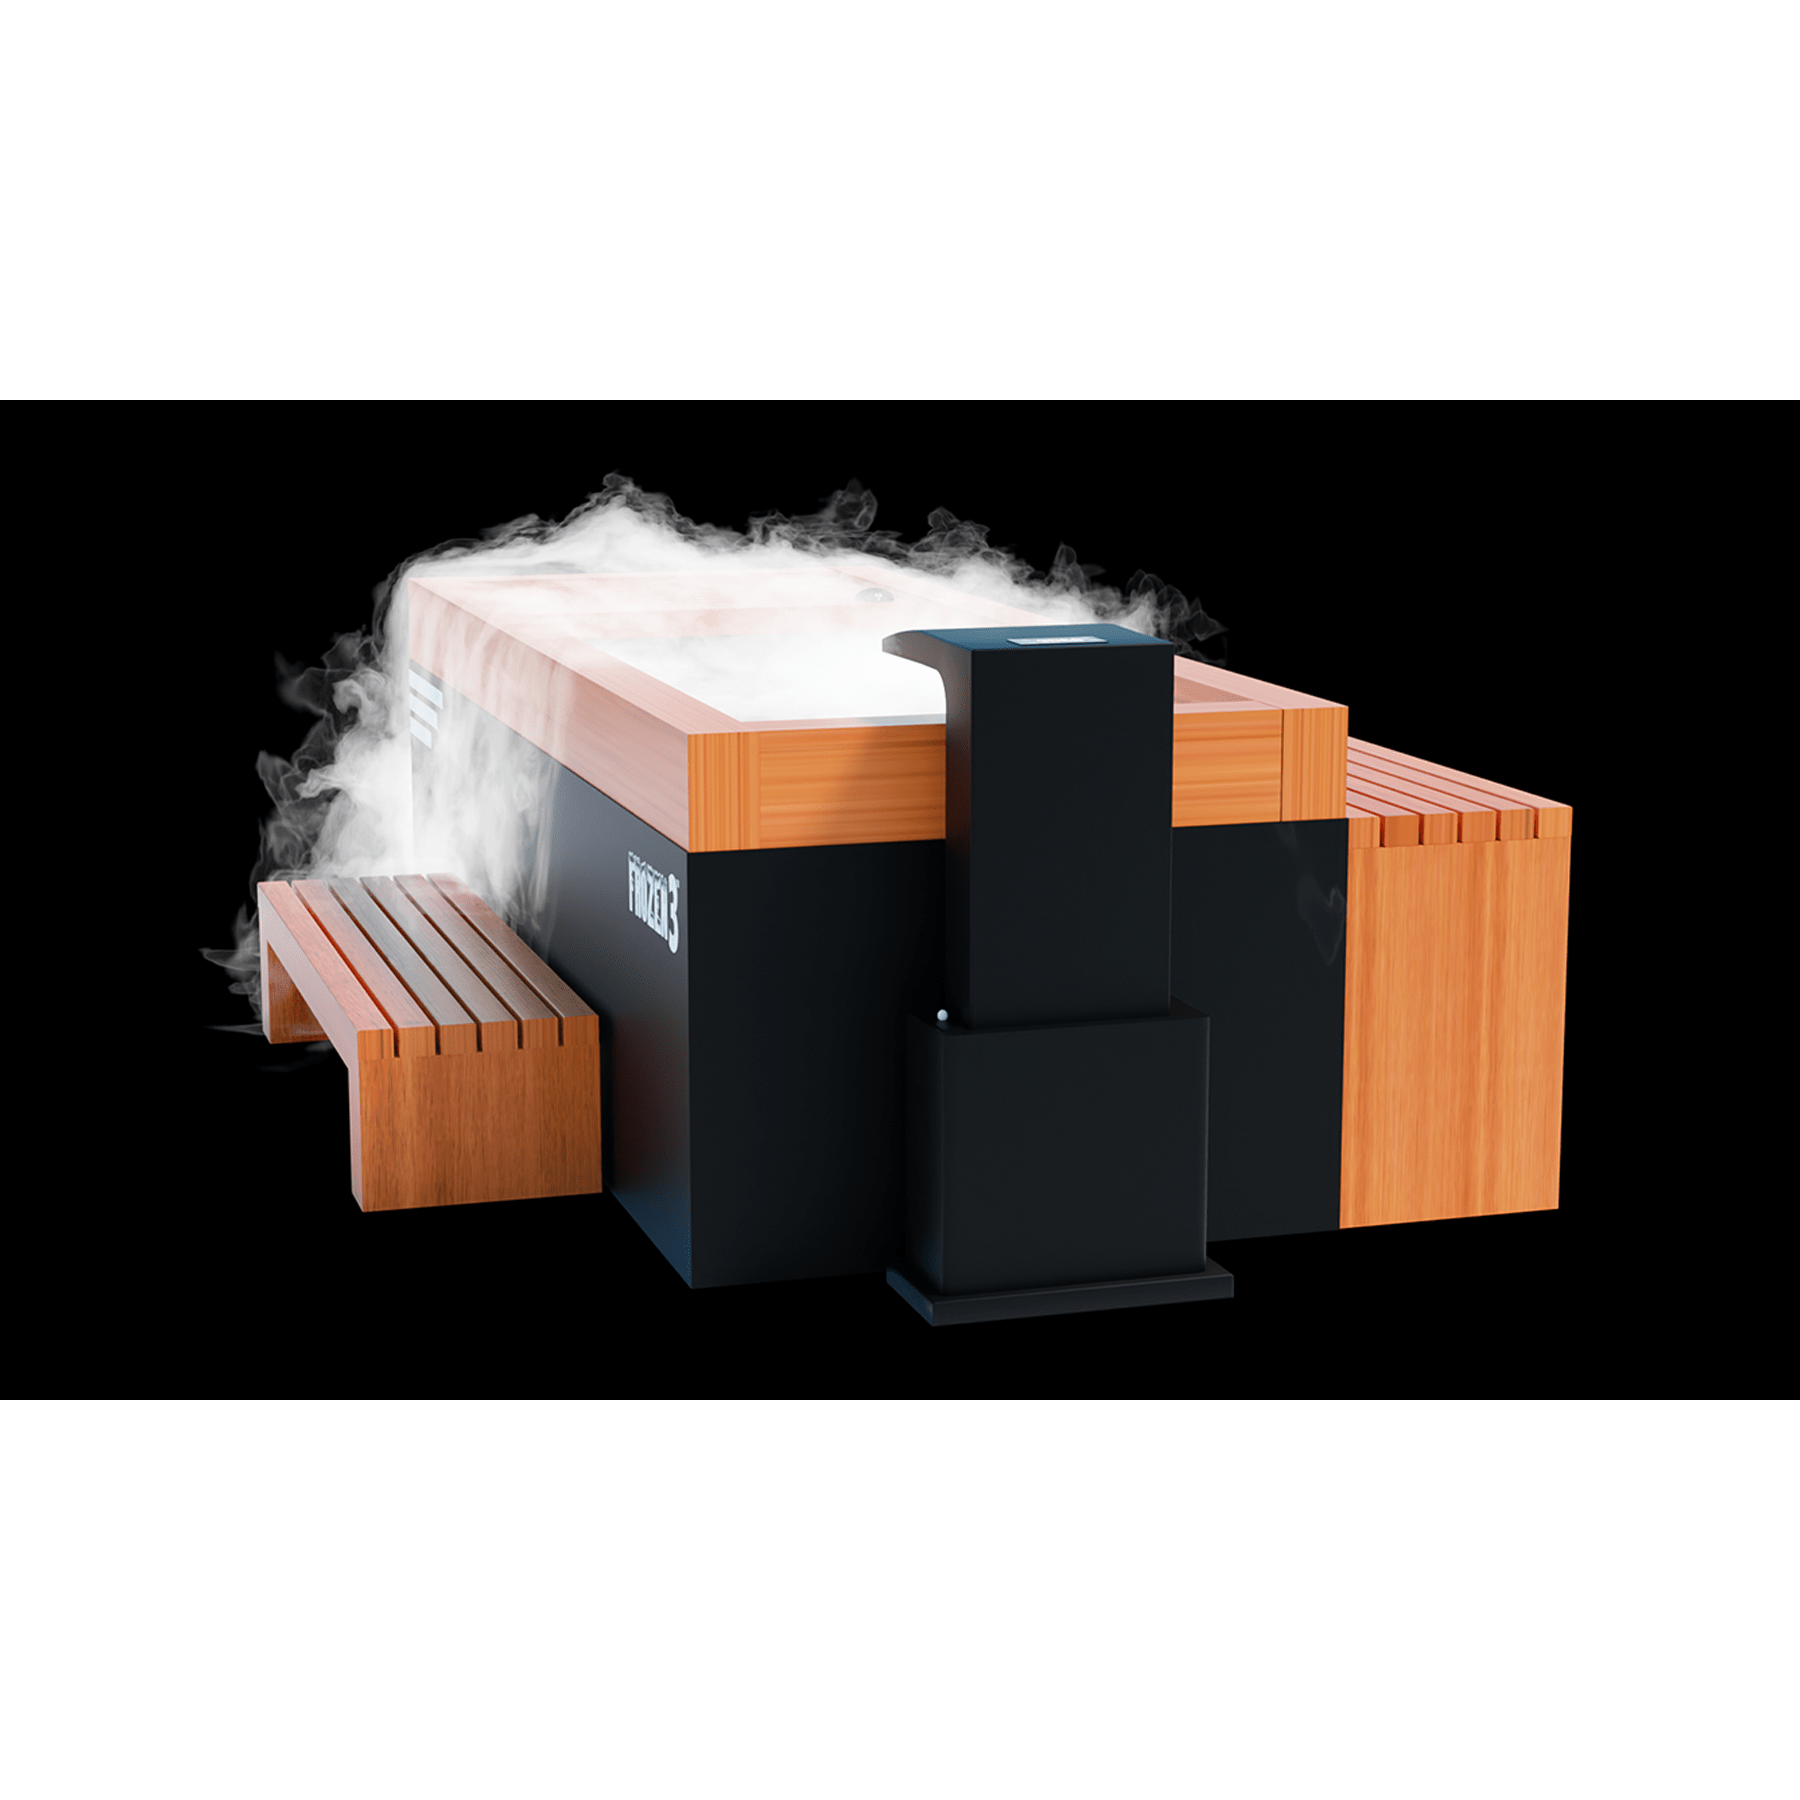 Medical Frozen 3 Cold Plunge + Accessories Kit + Essential Oil Steam Generator - Serenity Provision